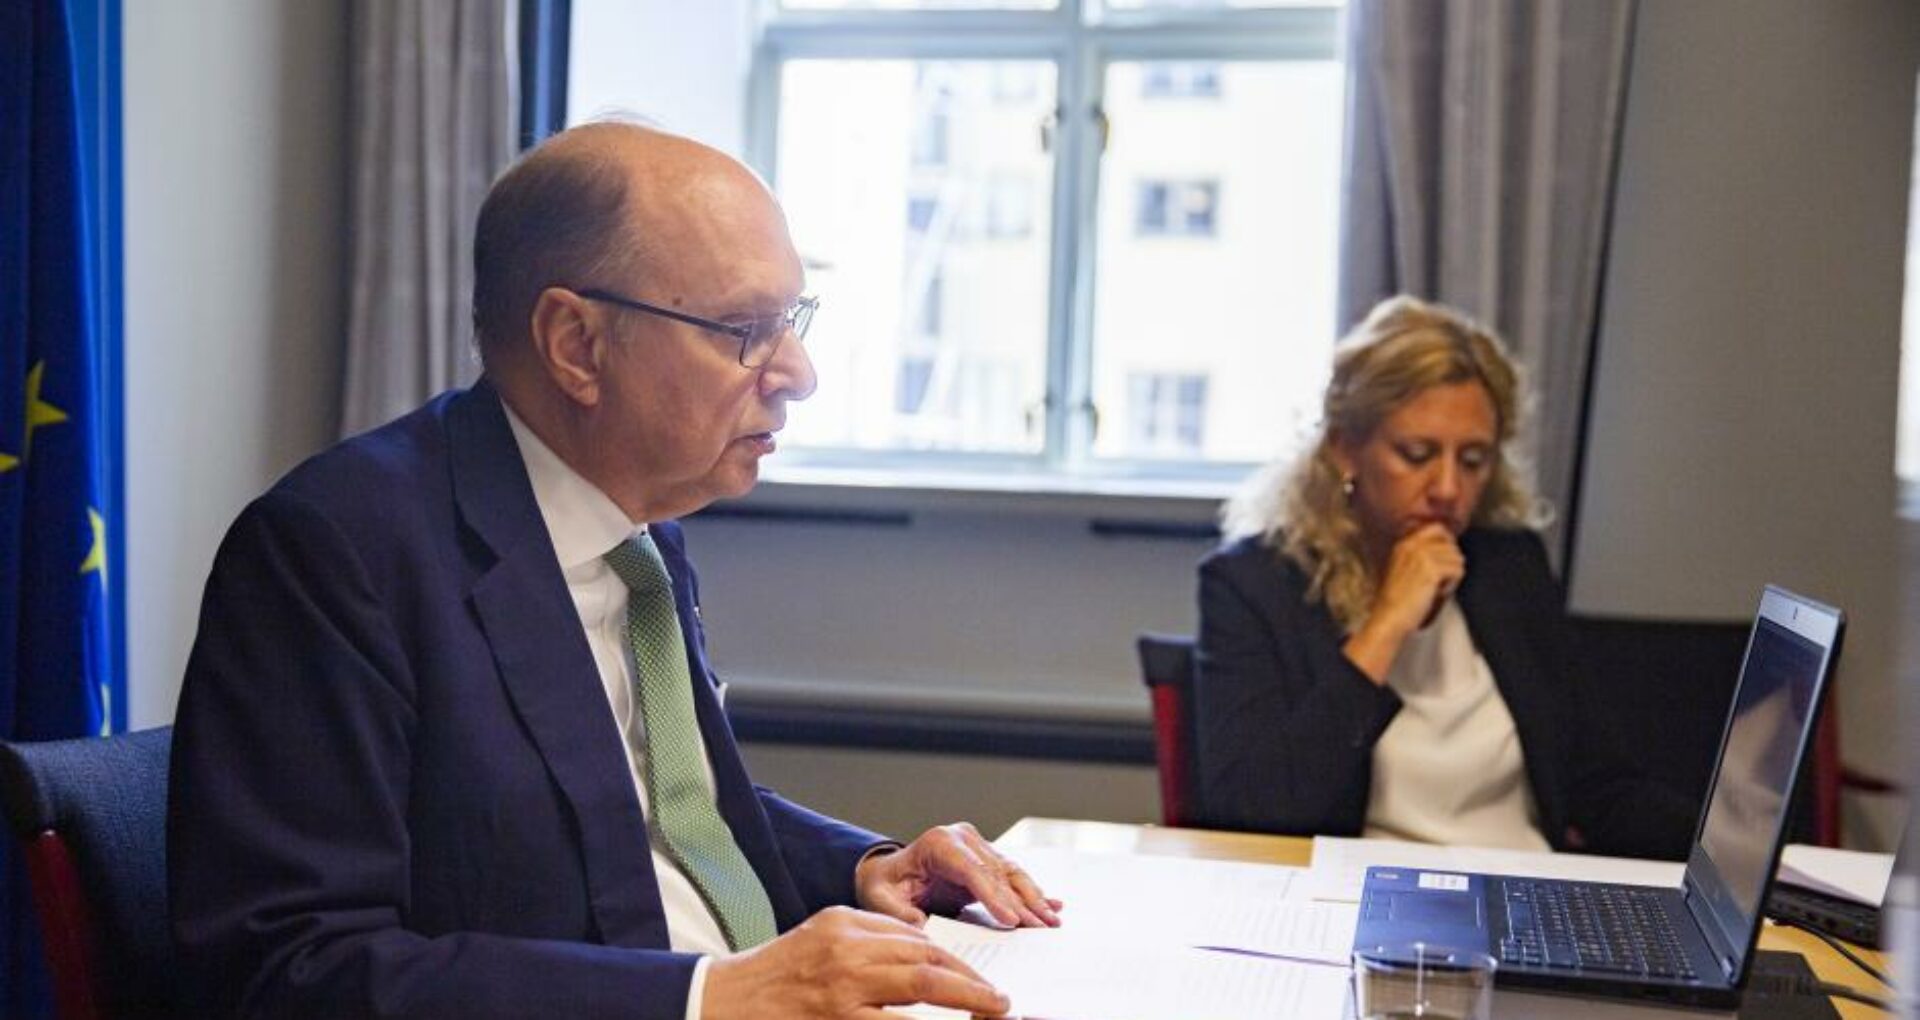 Sweden’s 2021 OSCE Chair to Focus on the Organization’s Fundamental Tasks